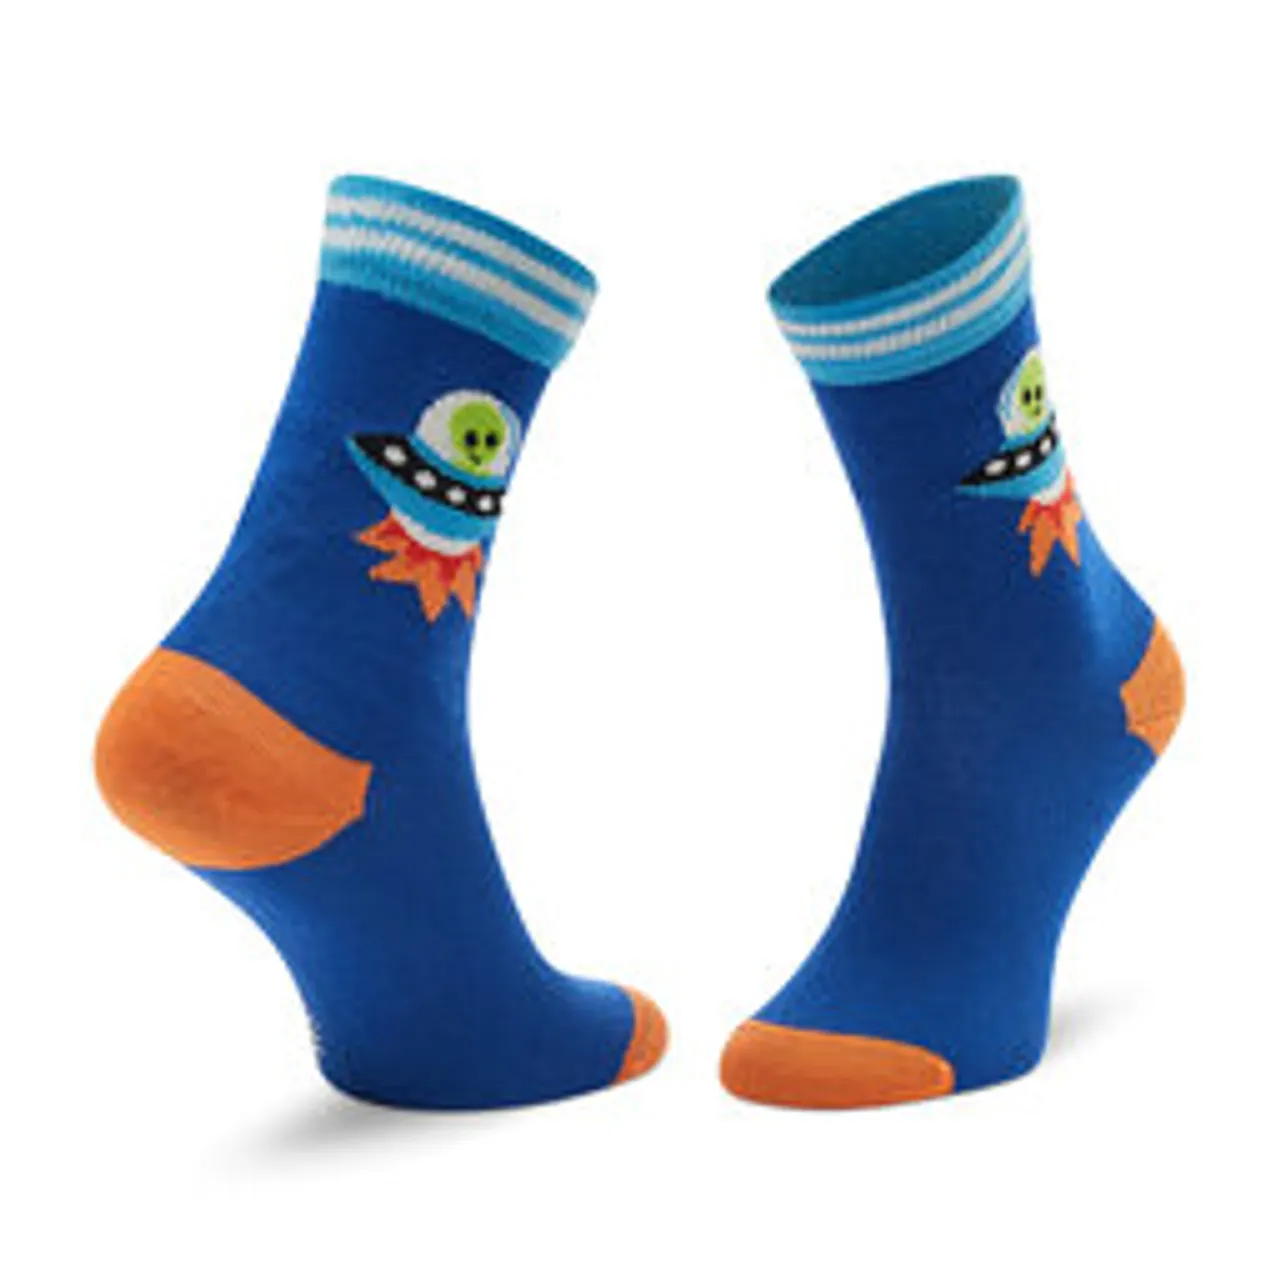 Hohe Kindersocken Happy Socks KALN02-9300 Bunt